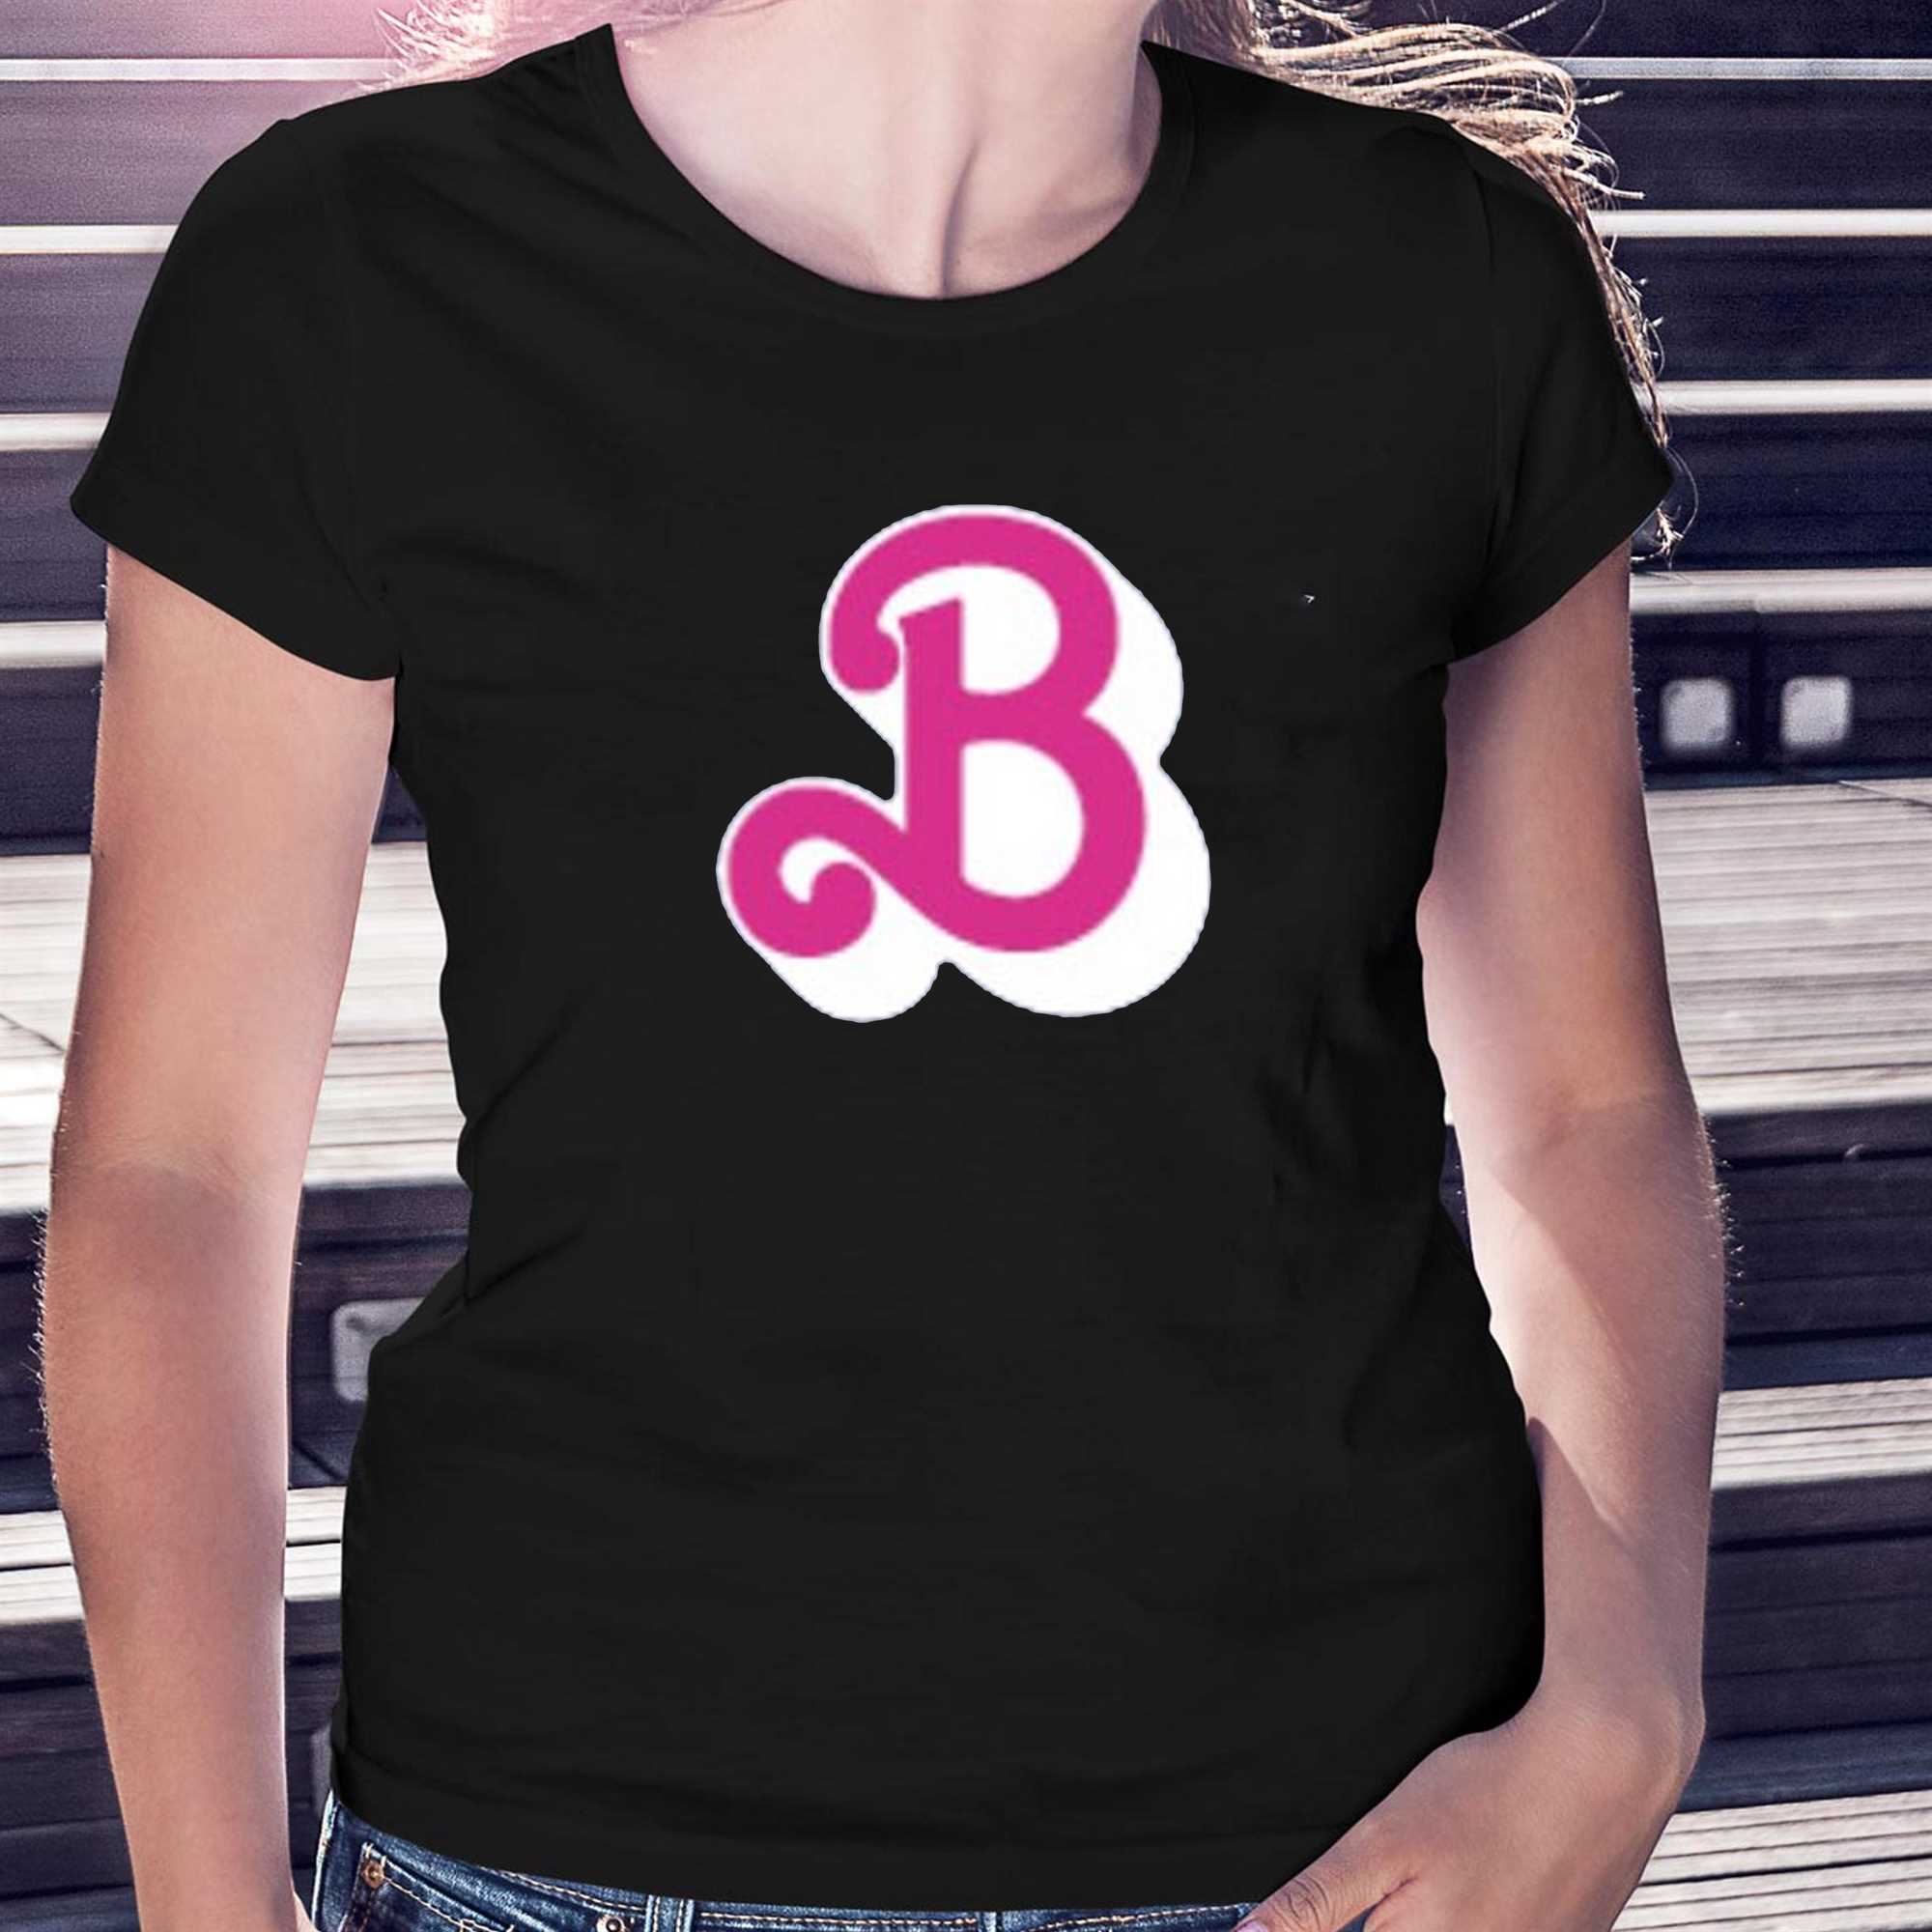 Barbie X Red Sox Shirt Limited, Custom prints store